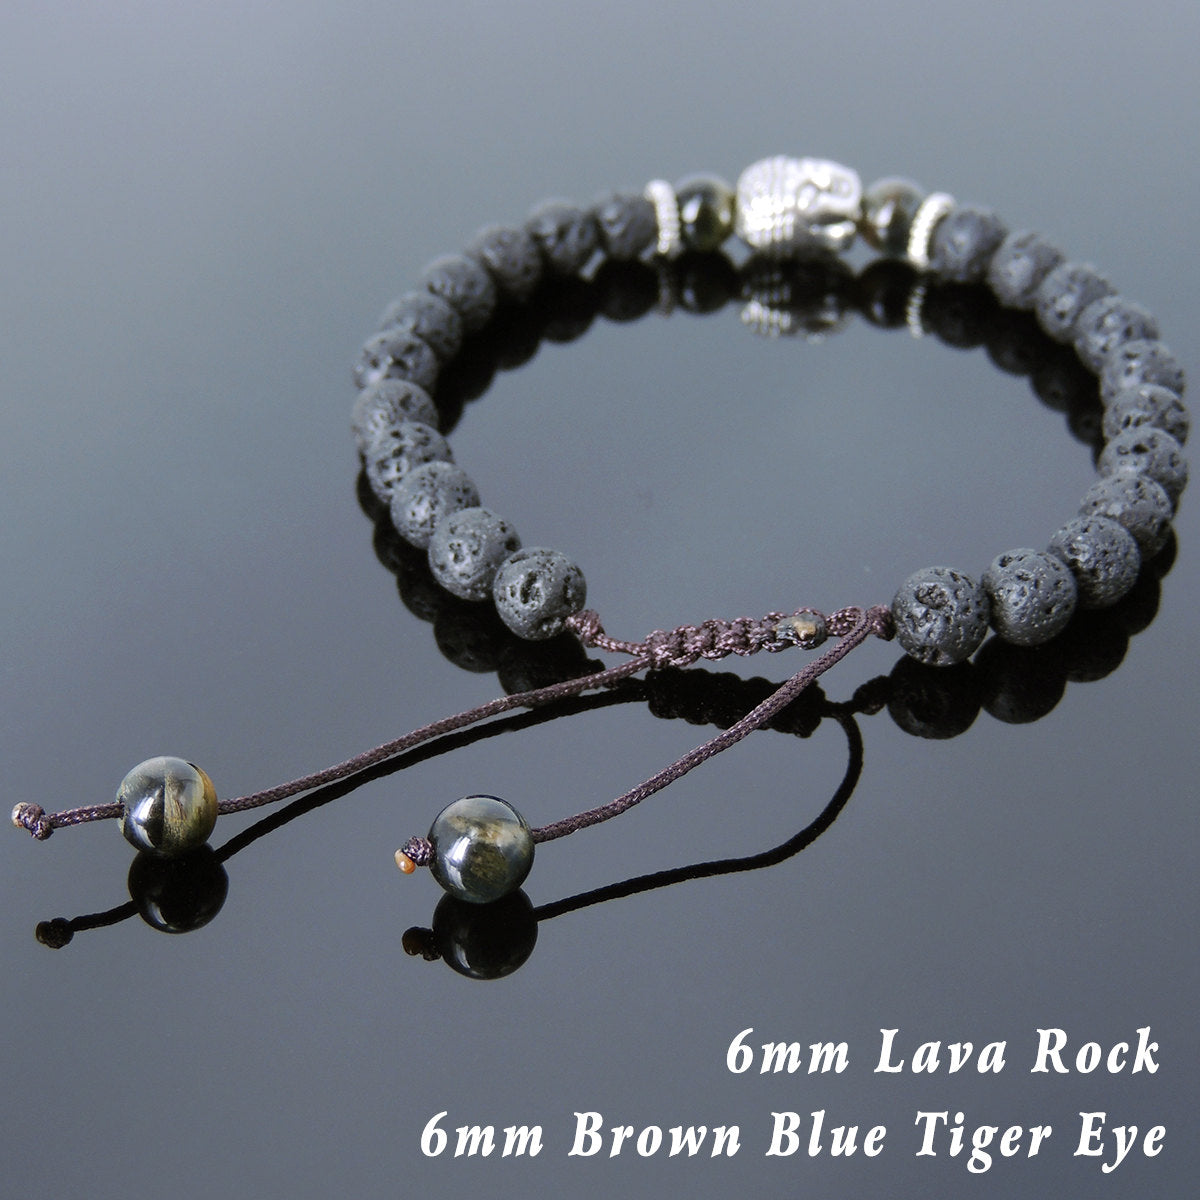 6mm Brown Blue Tiger Eye & Lava Rock Adjustable Braided Stone Bracelet with Tibetan Silver Spacers & Sakyamuni Buddha Bead - Handmade by Gem & Silver TSB233